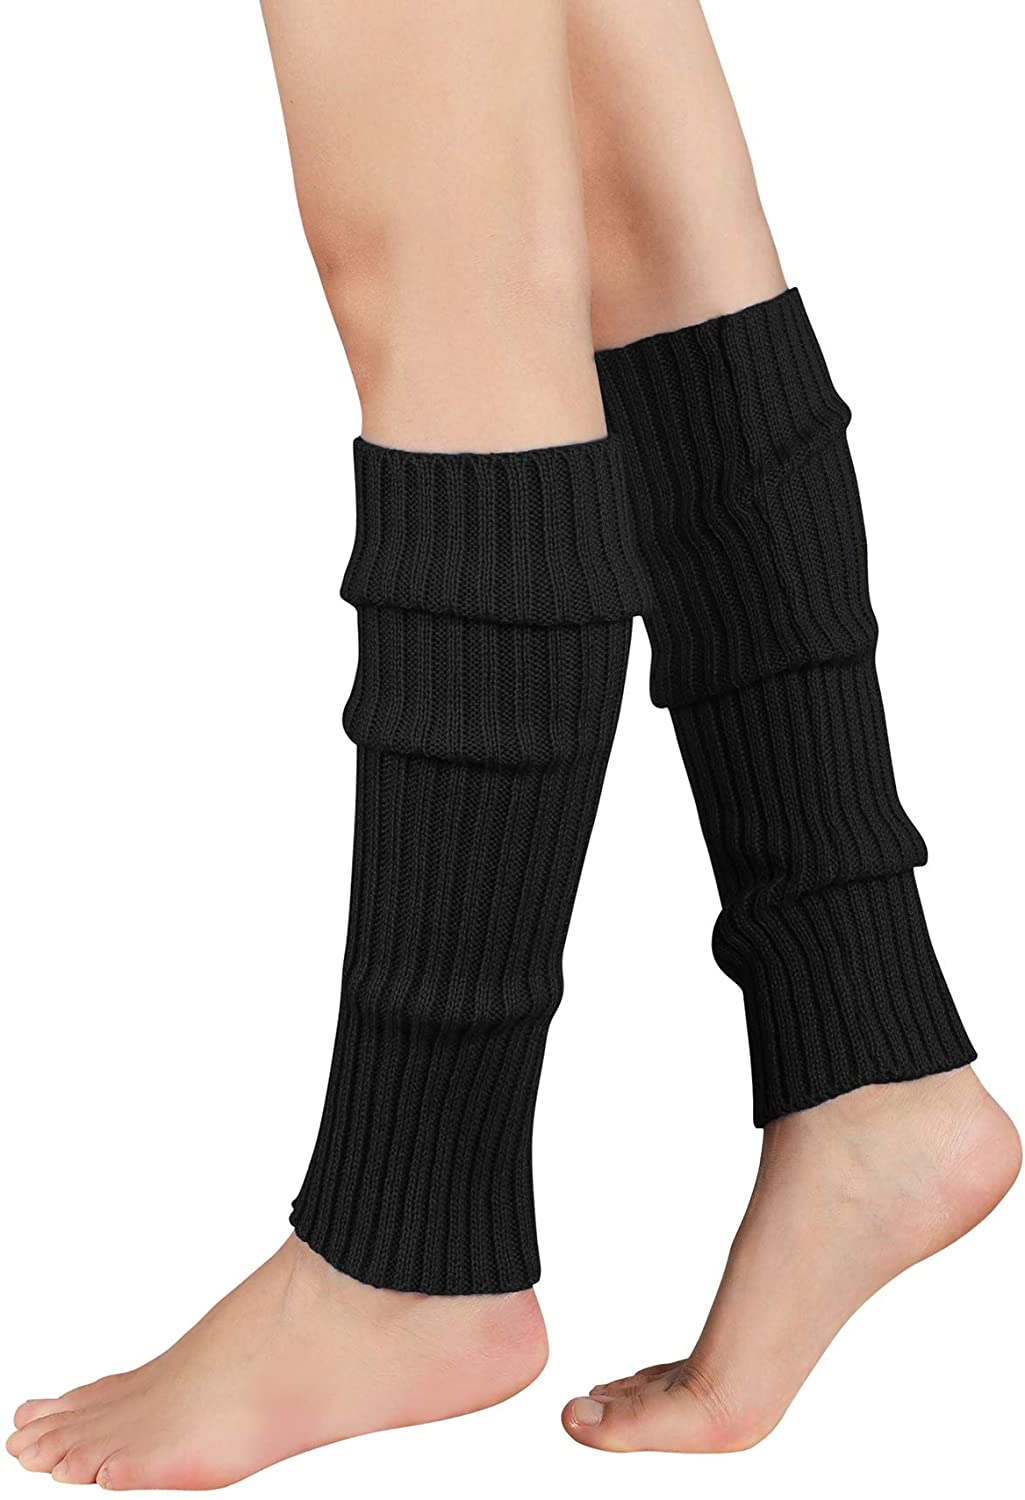 Ankle Warmers For Women Ladies Girls 80s Party Club Neon Fancy Dress Leg Accessories Boots Cuff Warmer Ribbed Stretch Knee Leg Socks Leg Warmers